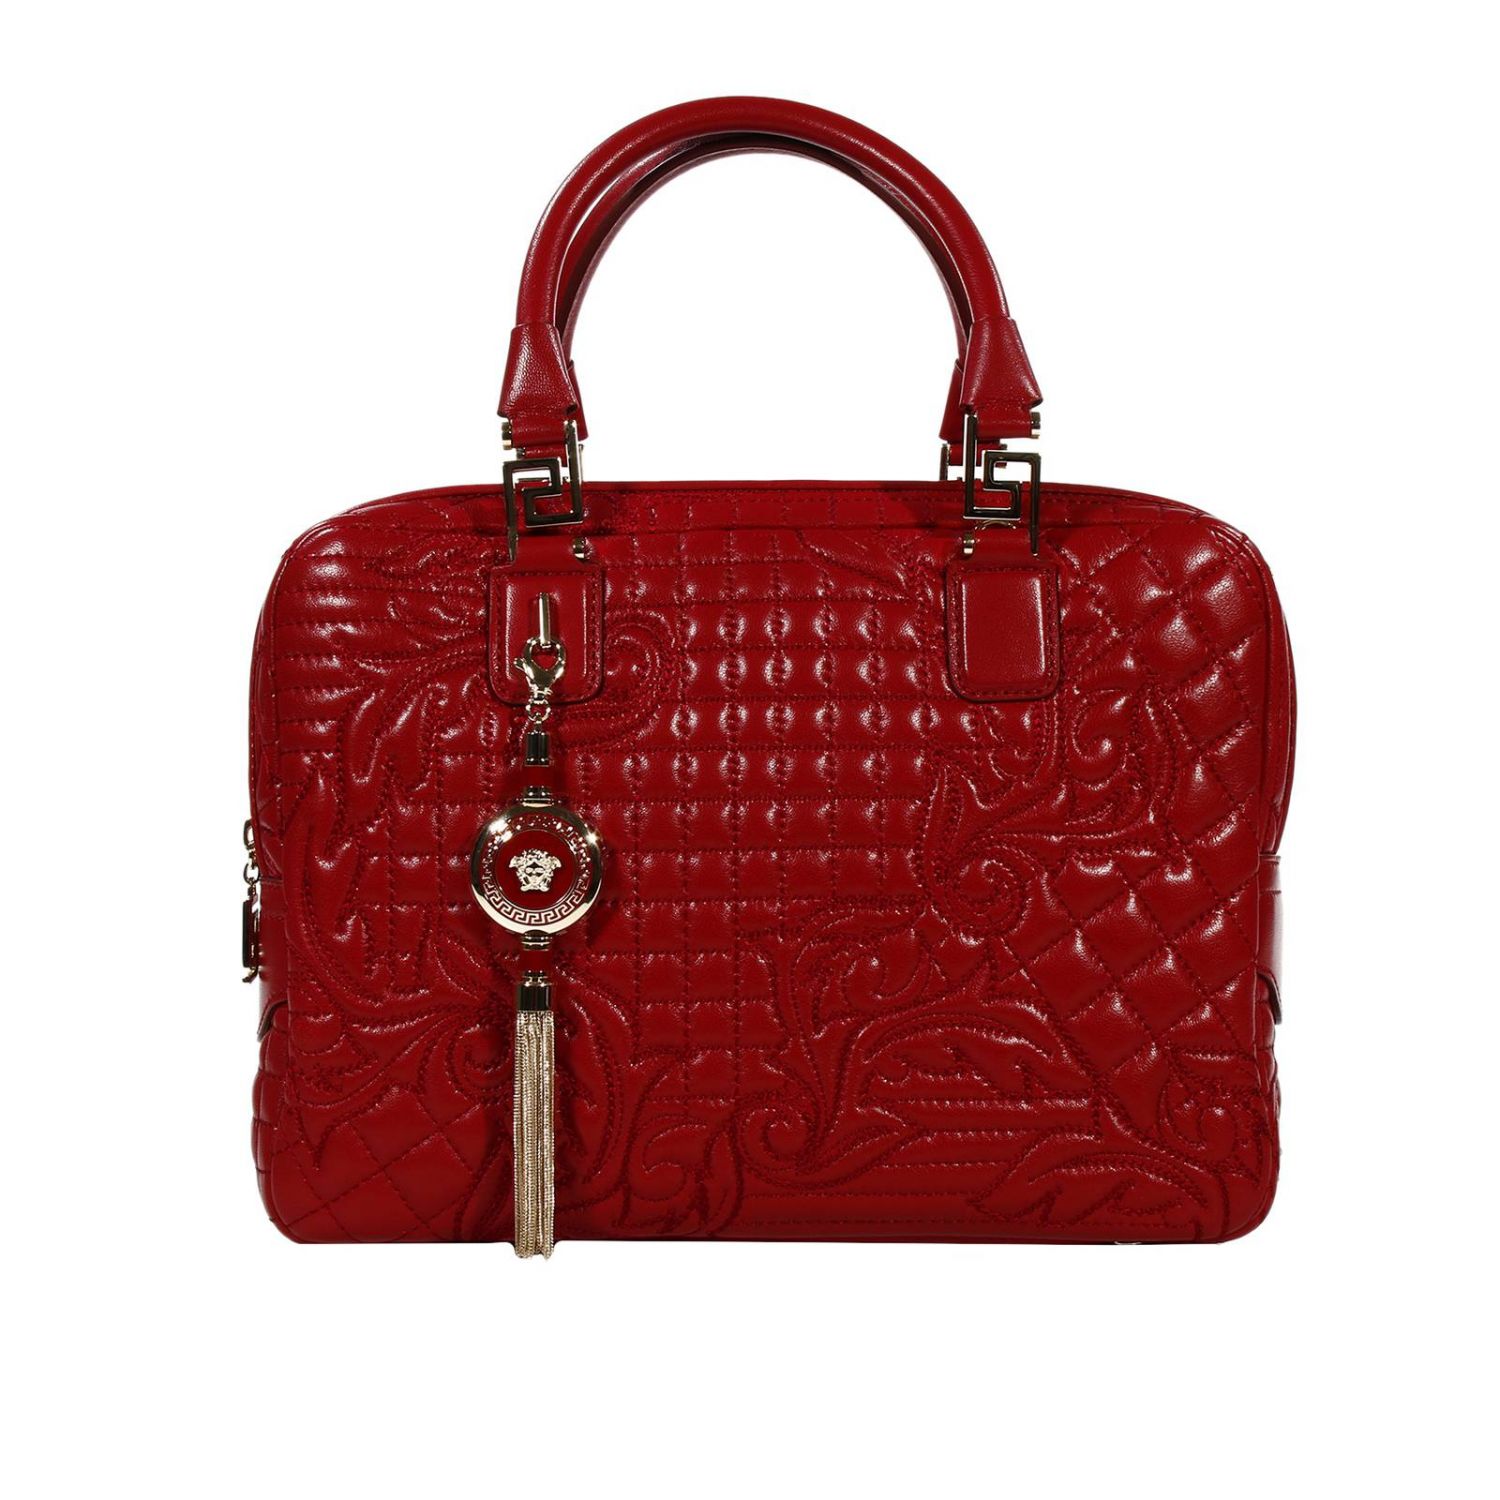 Versace Outlet: | Shoulder Bag Versace Women Red | Shoulder Bag Versace